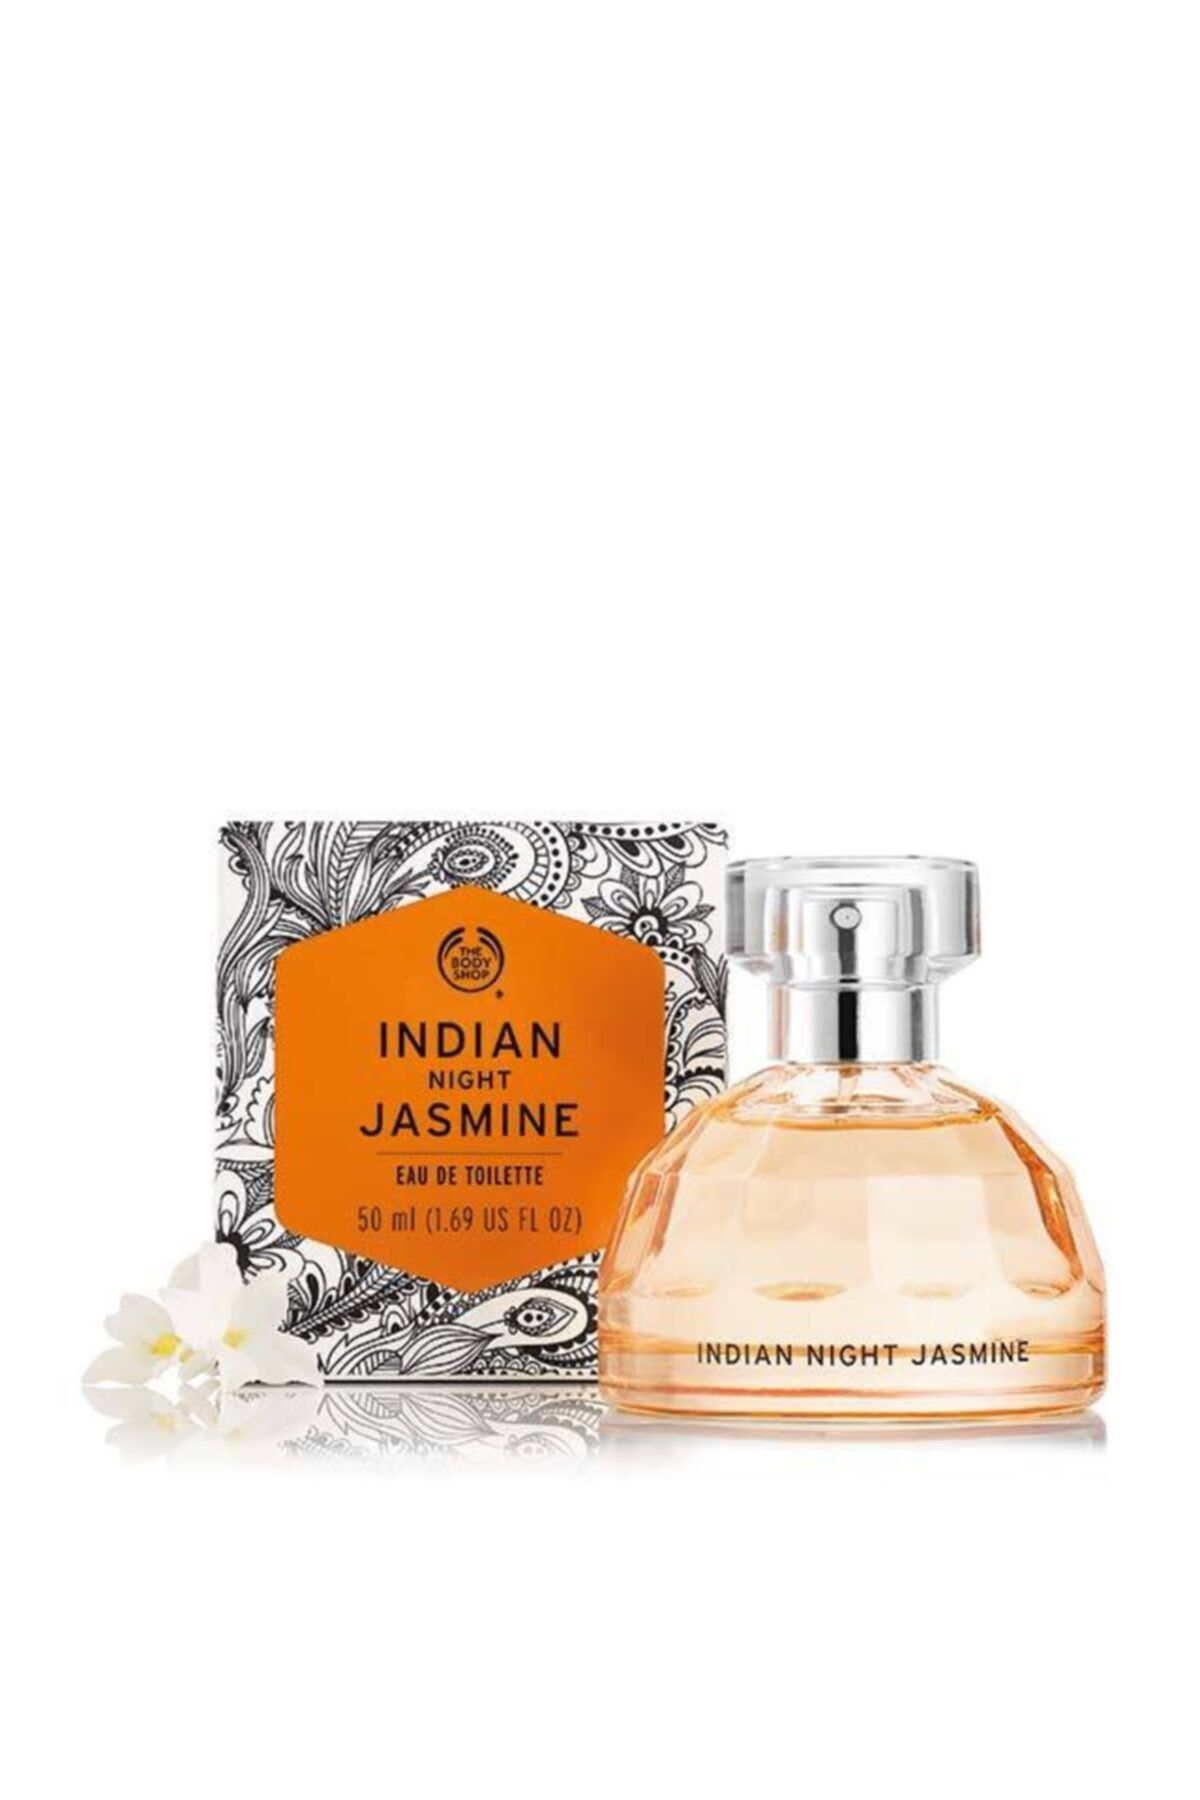 THE BODY SHOP Indian Night Jasmine - Eau De Toilette